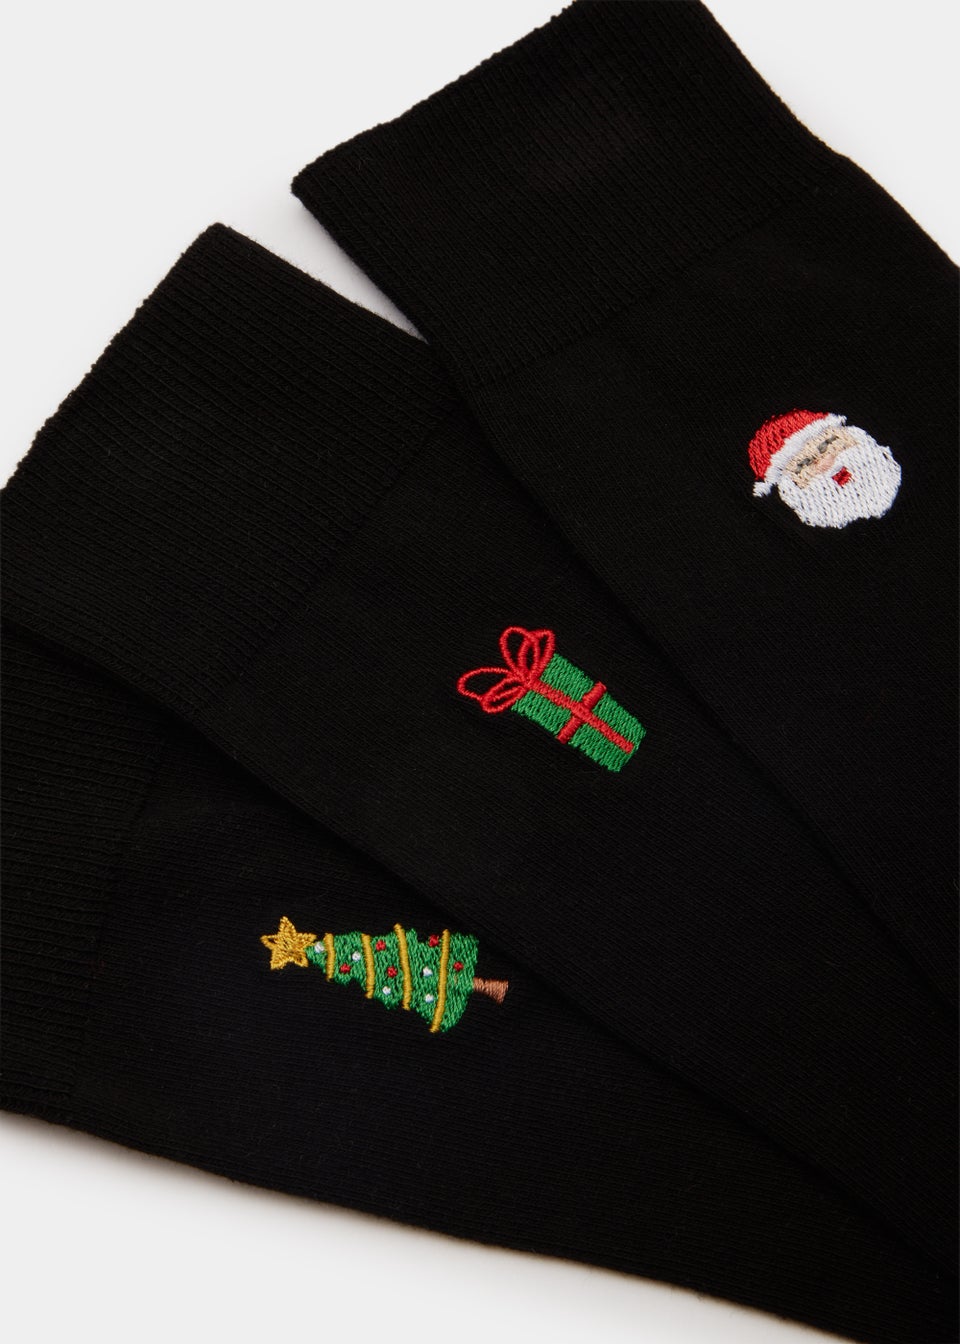 3 Pack Black Christmas Embroidered Socks